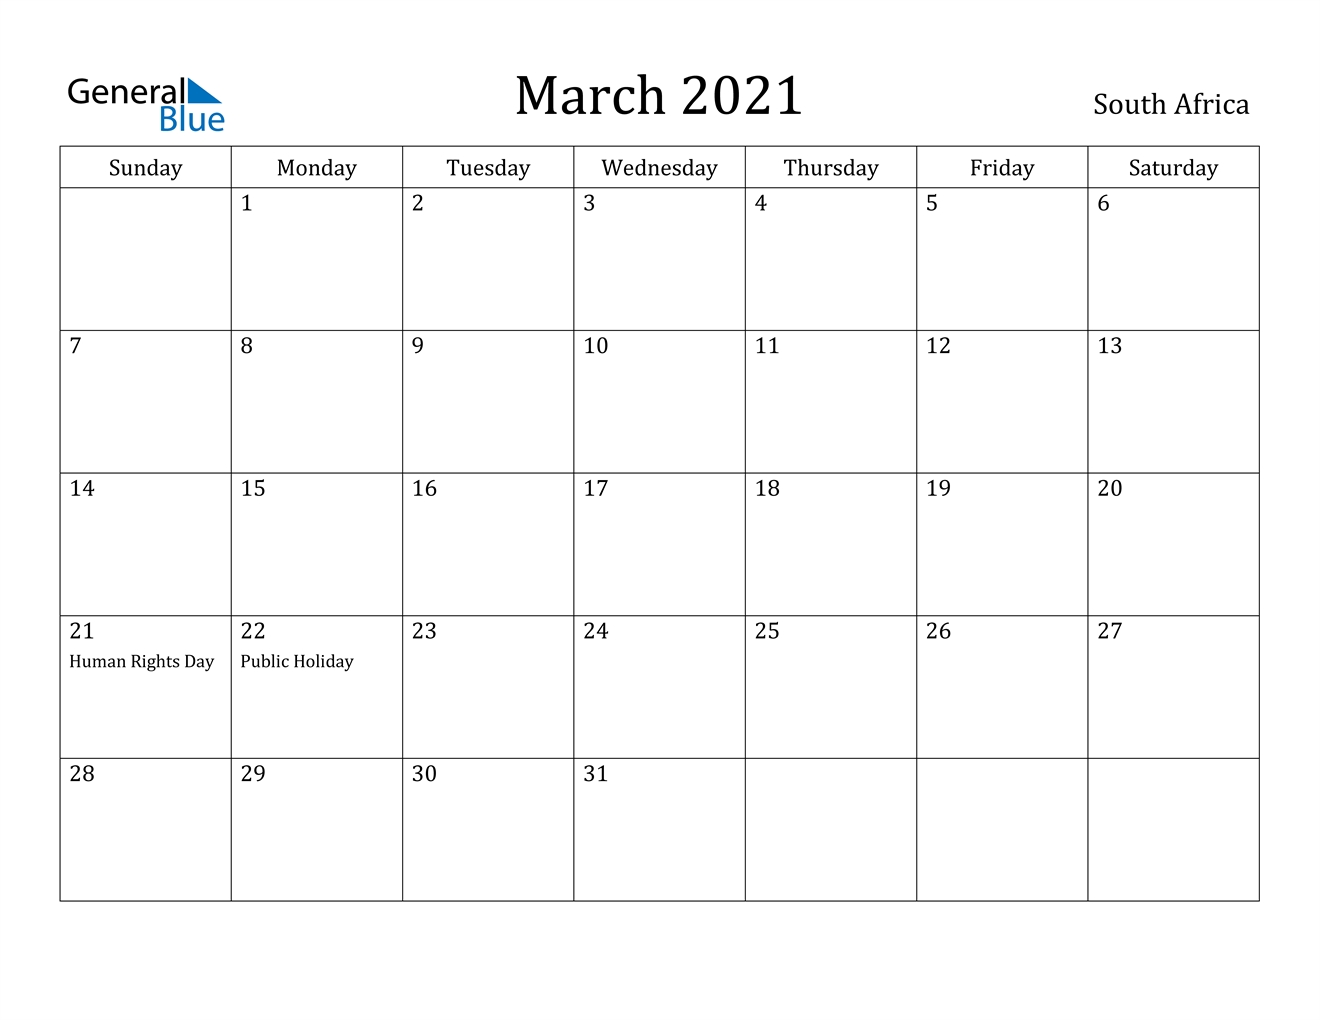 March 2021 Calendar - South Africa November 2020 - March 2021 Calendar